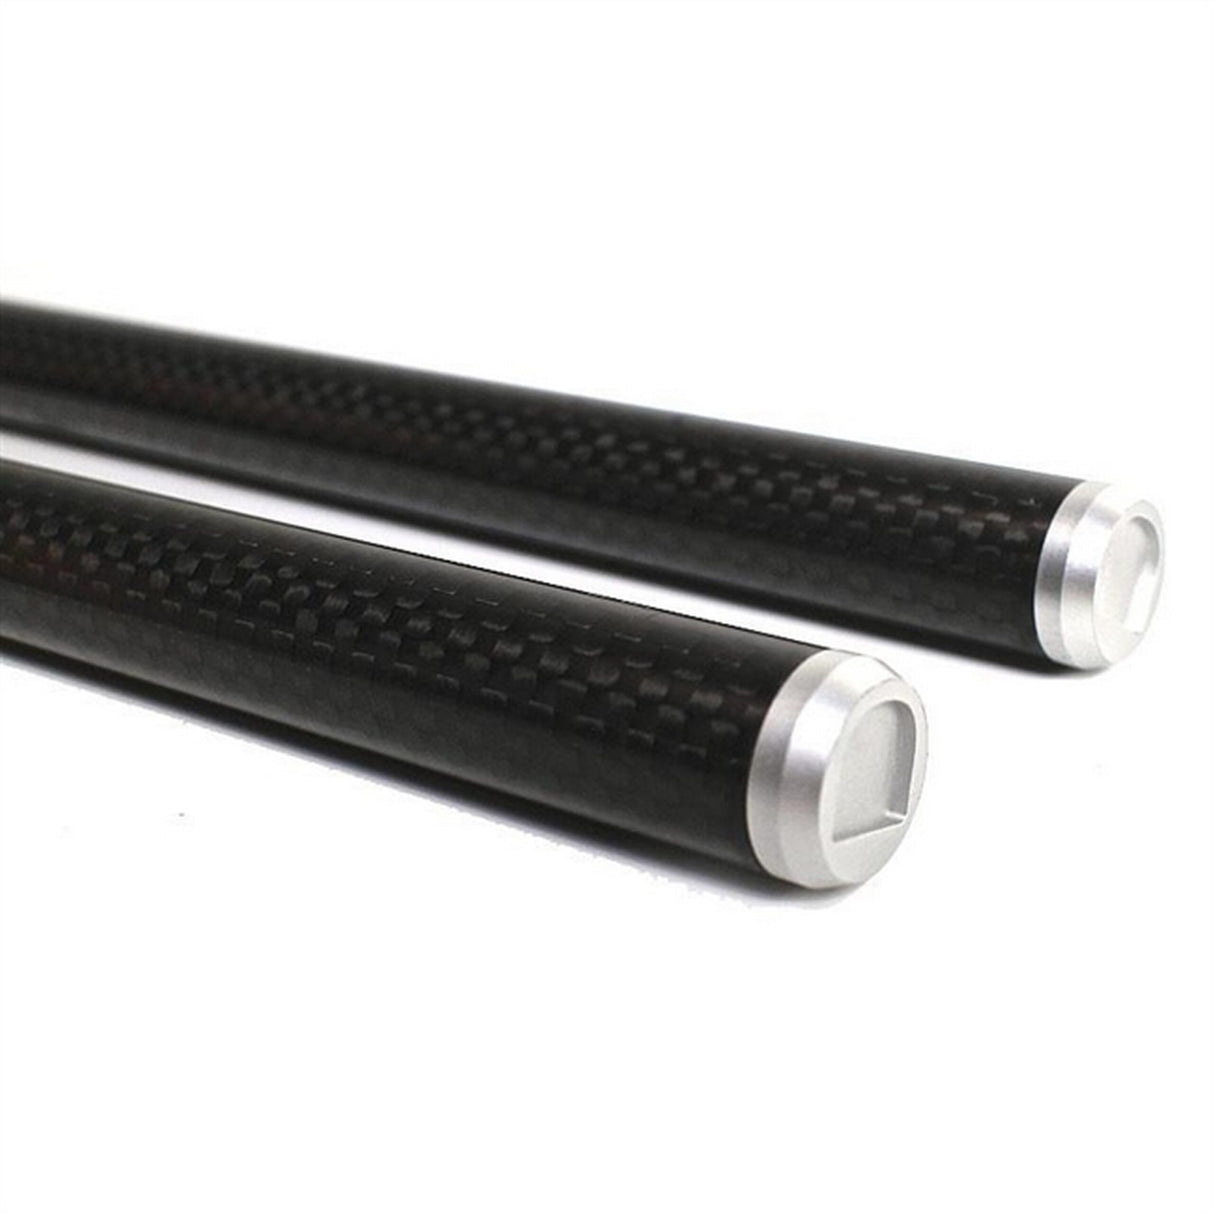 Genustech G-DCFR150 Deluxe Carbon Fiber Rods, 150mm, Pair